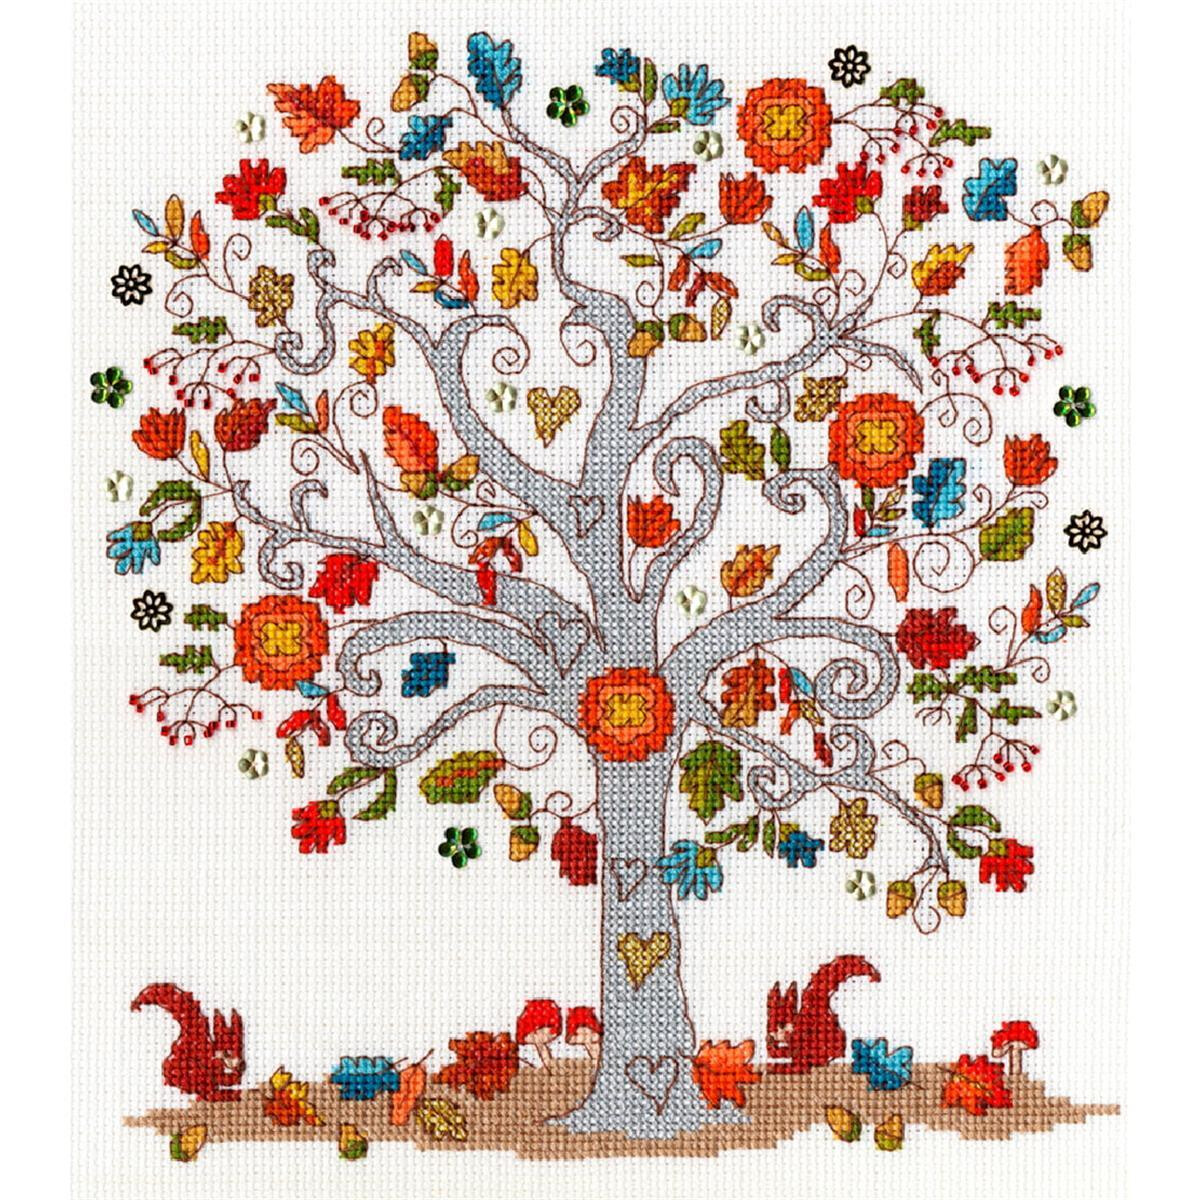 A vibrant cross stitch illustration or cross stitch...